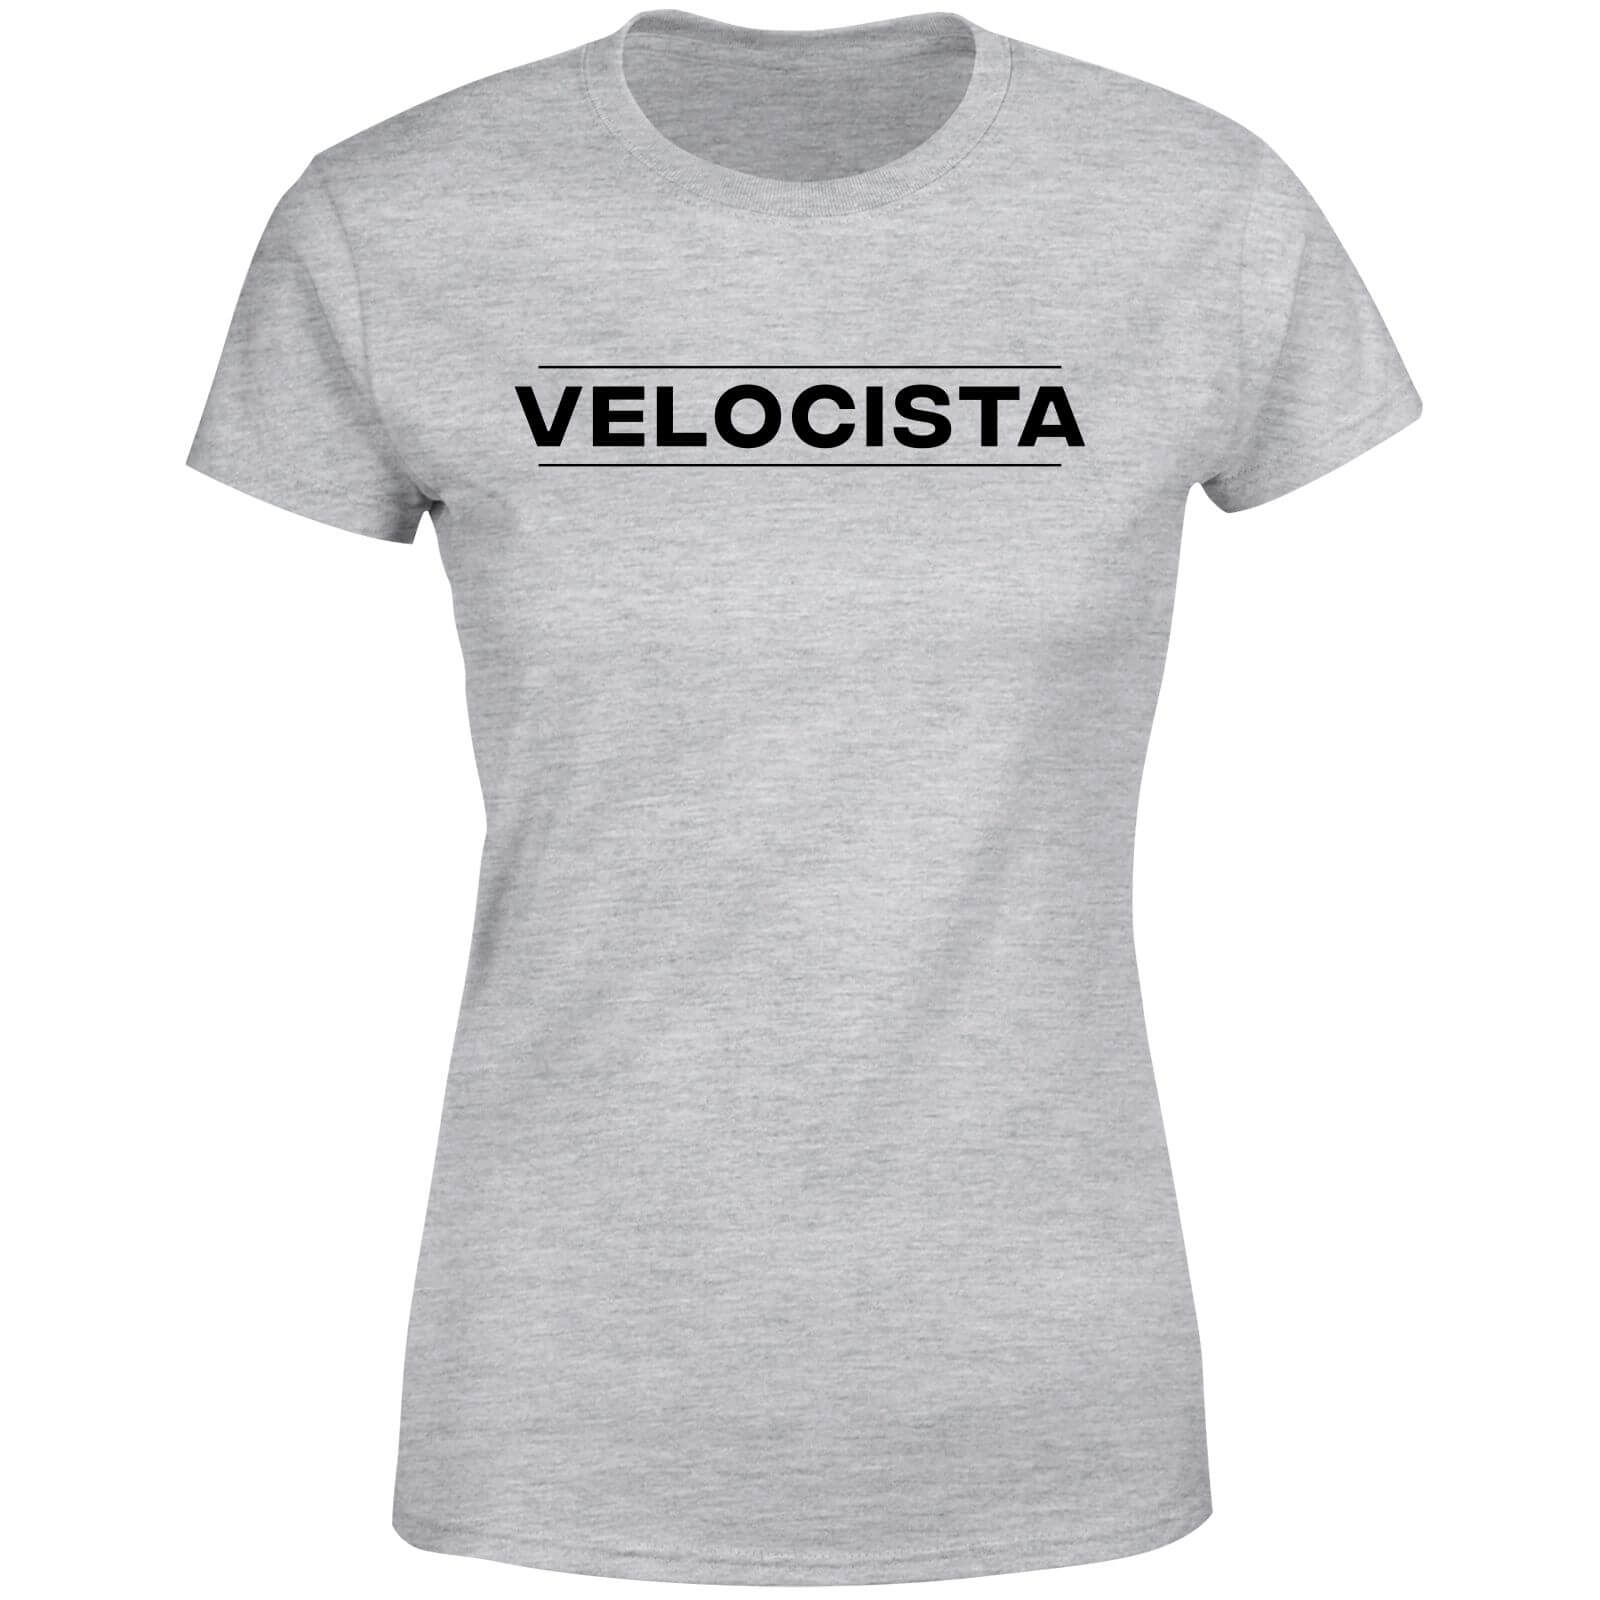 Velocista Women's T-Shirt - Grey - XXL - Grey